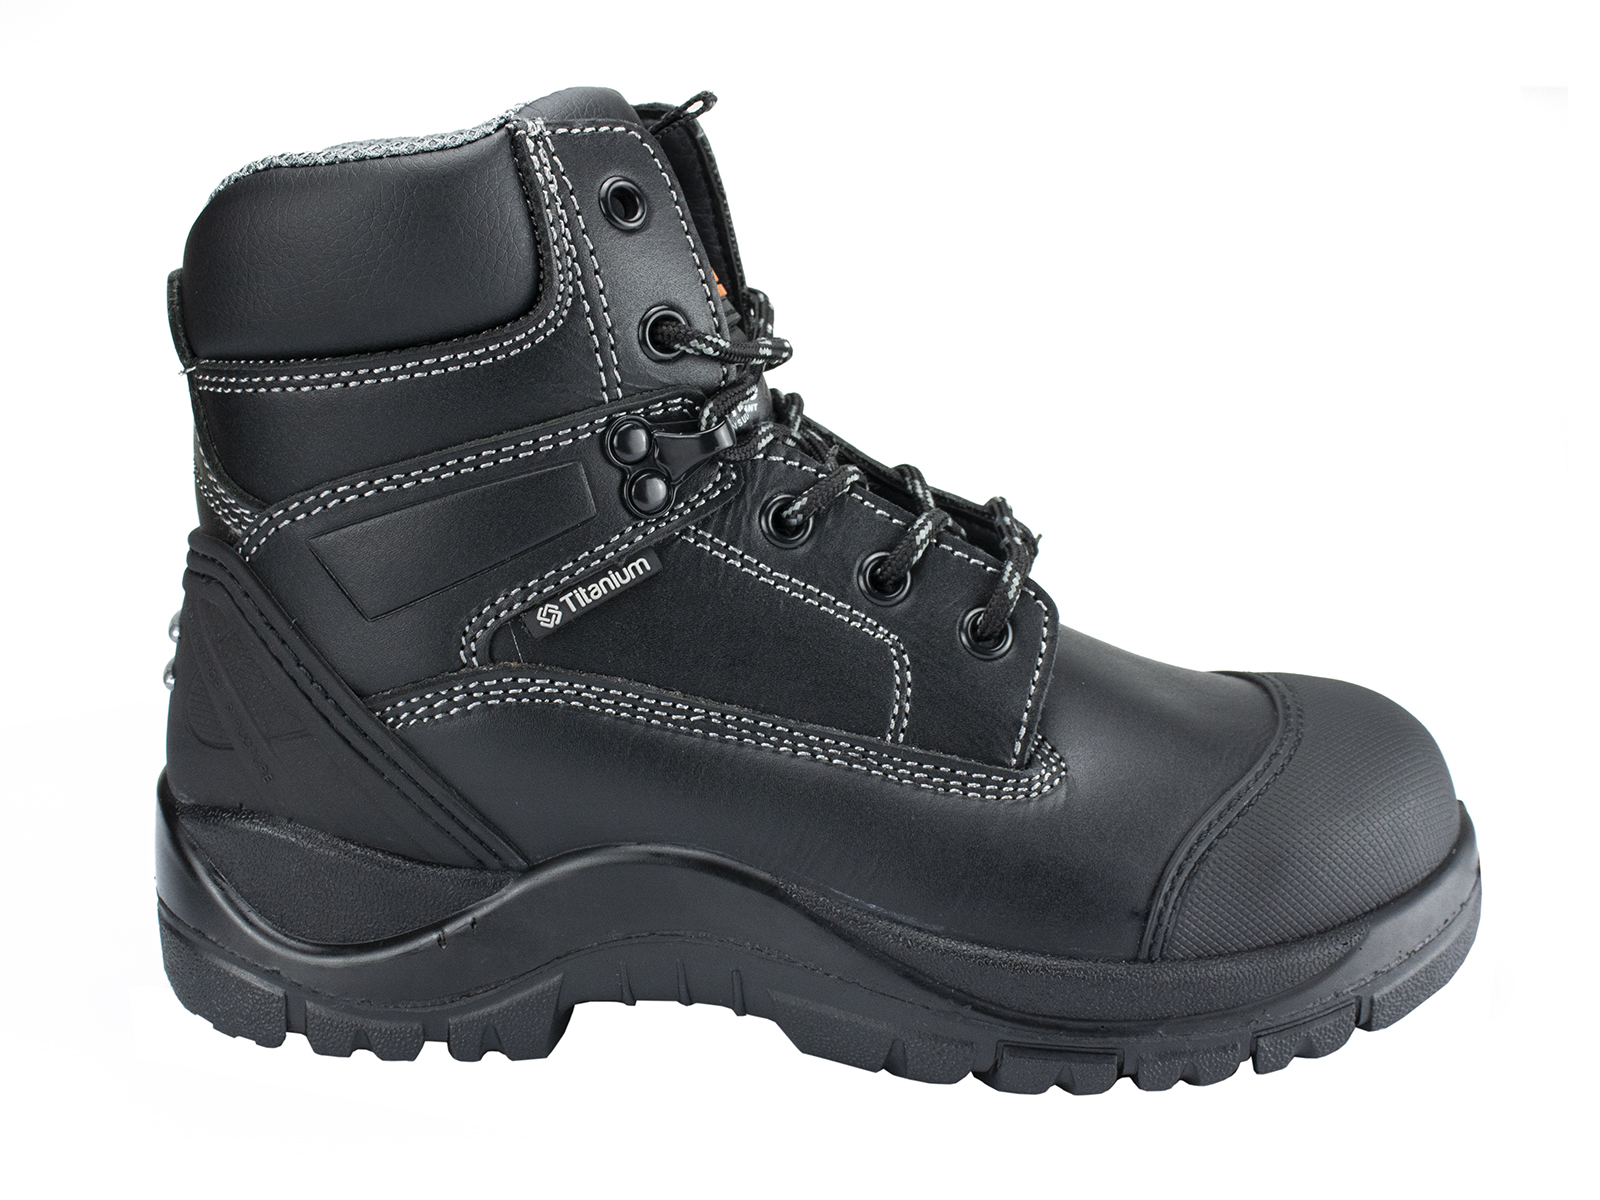 Bodyguard Titanium Leather Safety Boots | Bodyguard Workwear